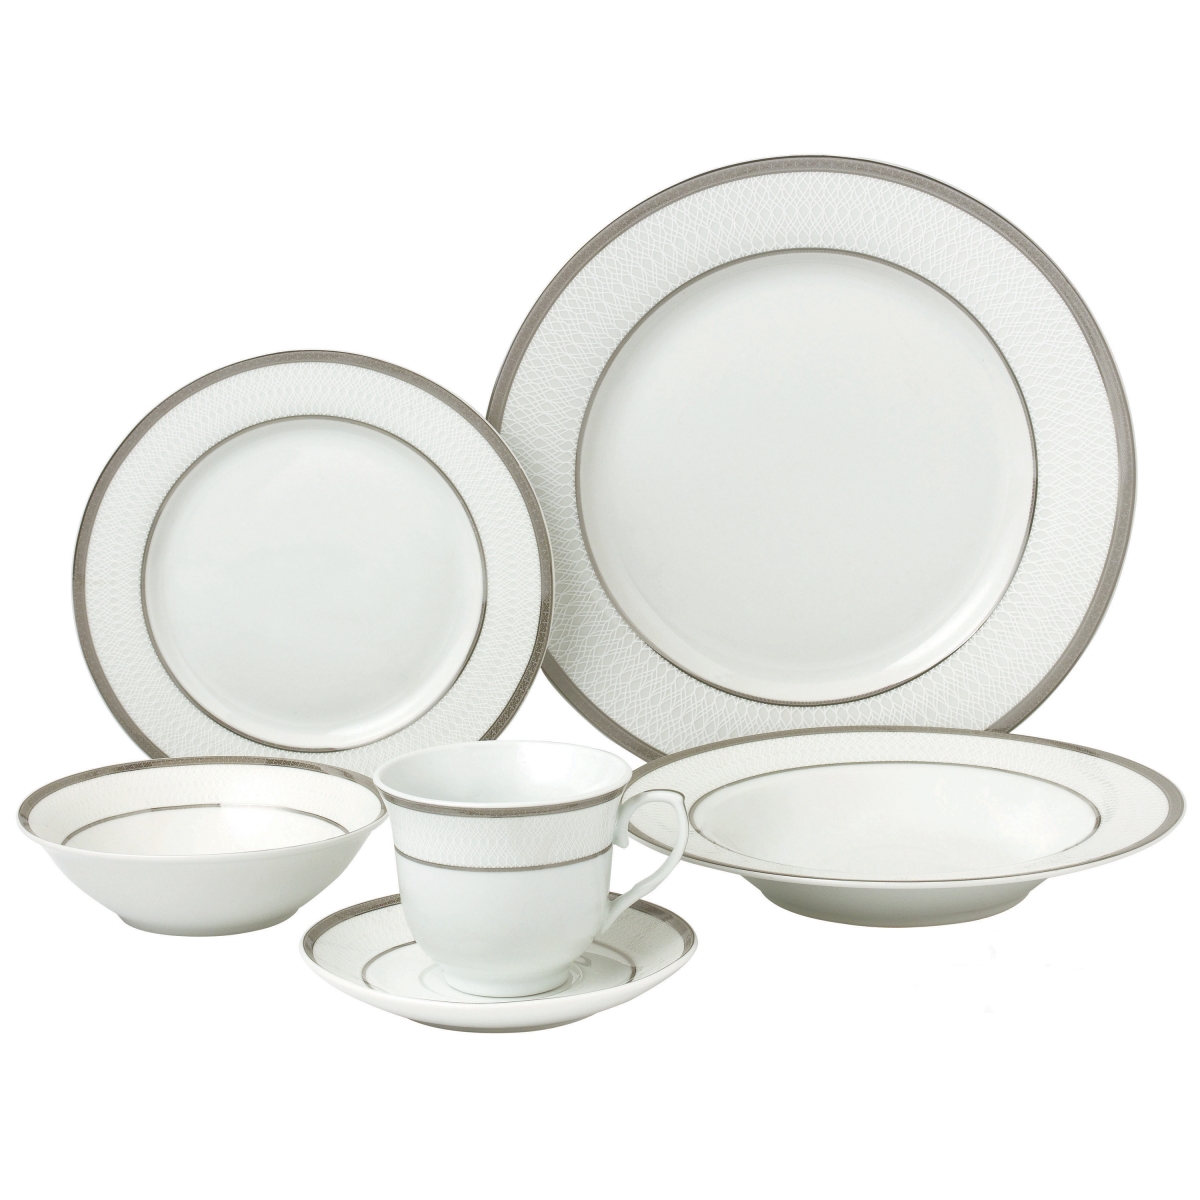 Lh430 24 Piece Porcelain Dinnerware Service, Silver - For 4 Ashley